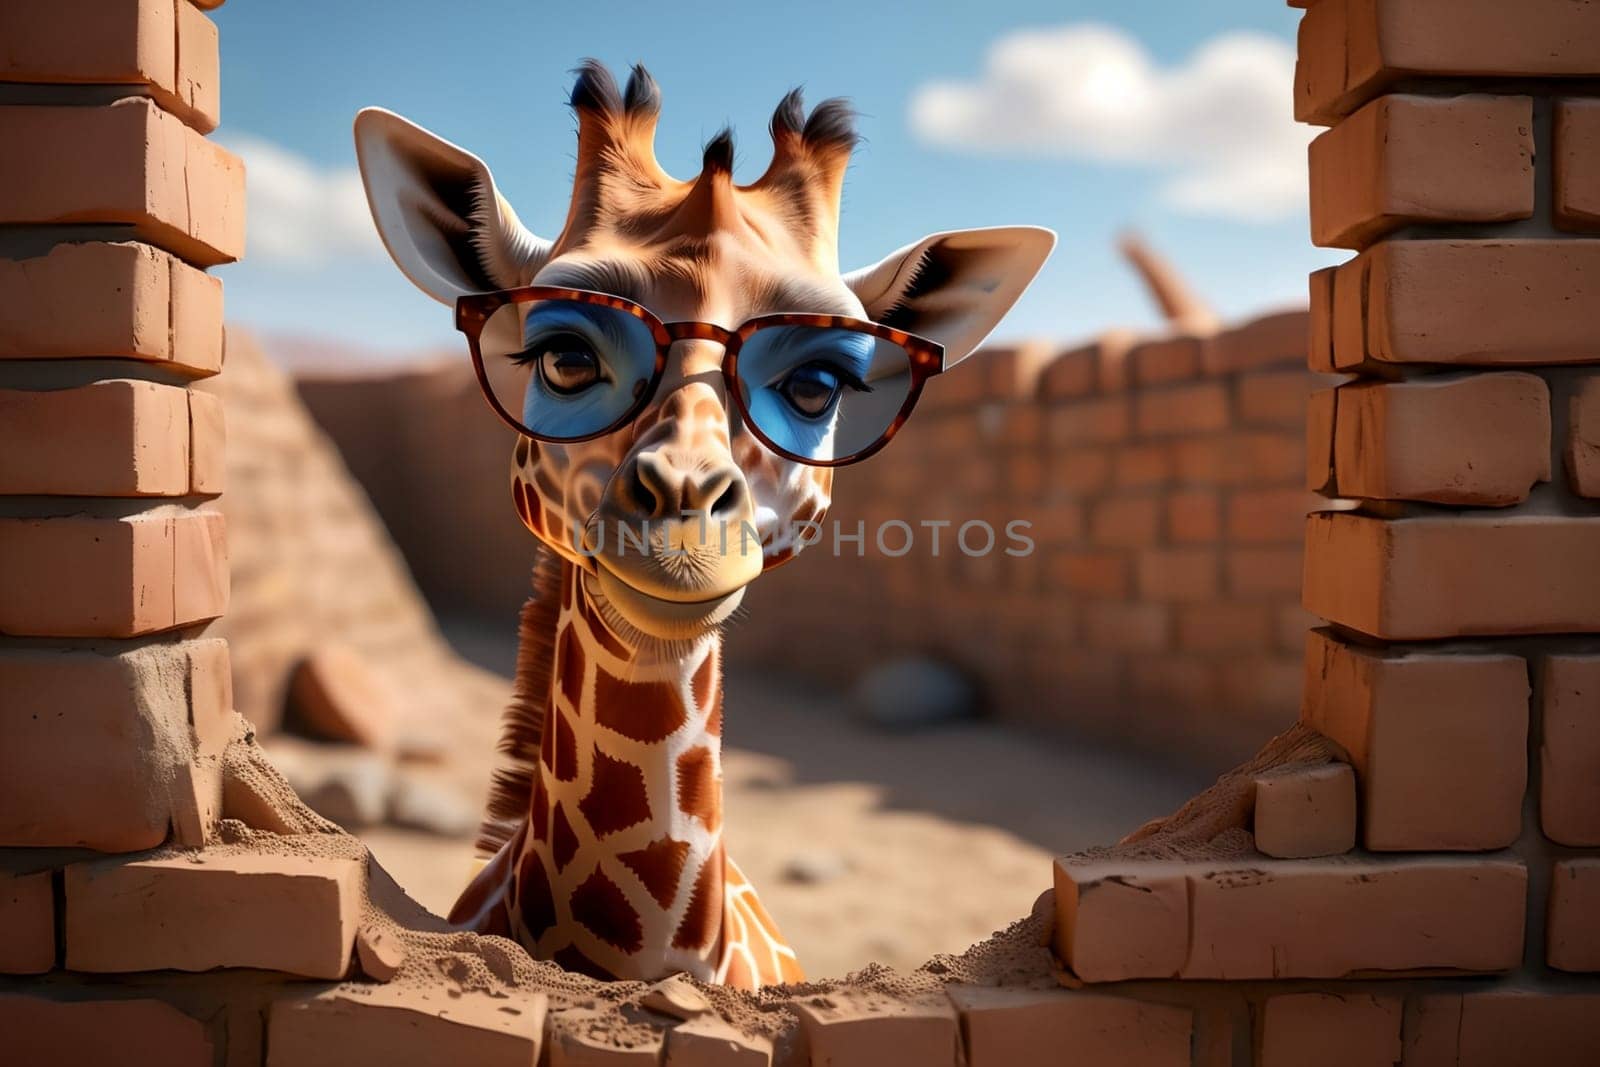 happy giraffe in summer against a brick wall background .